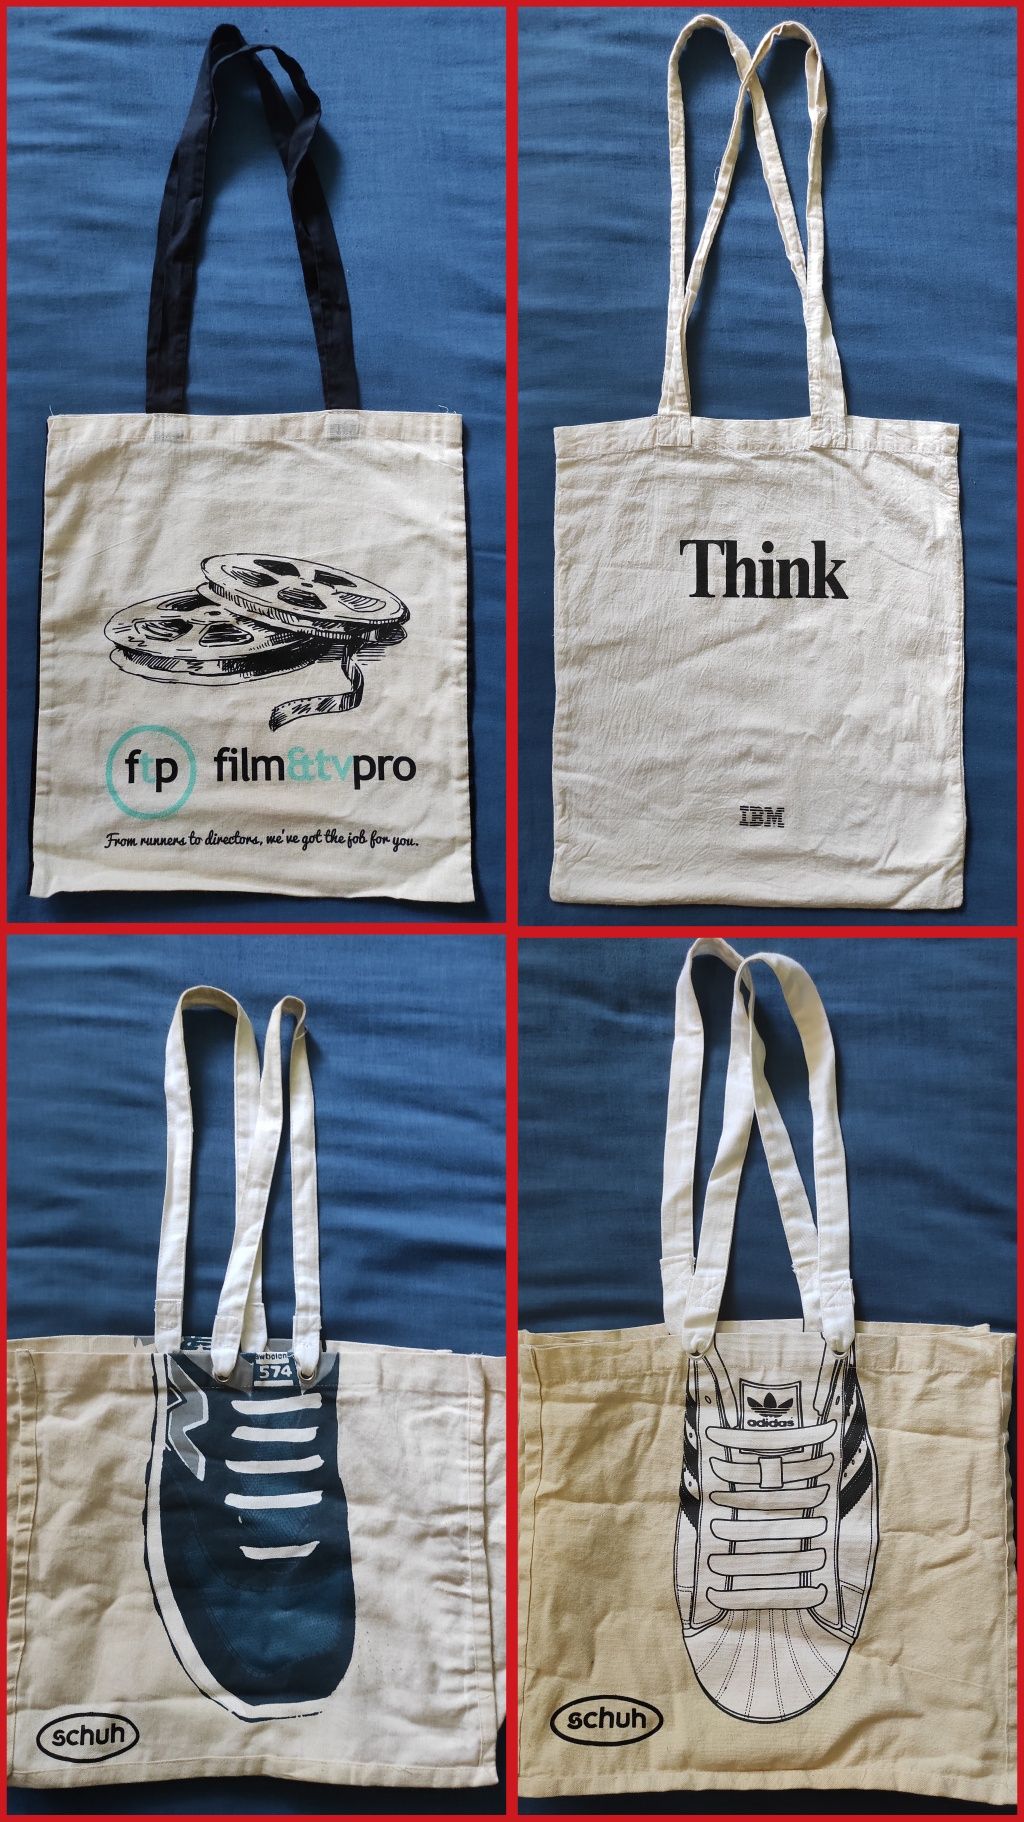 Тканевая эко сумка шоппер пляжная Think IBM, adidas, film & tv pro